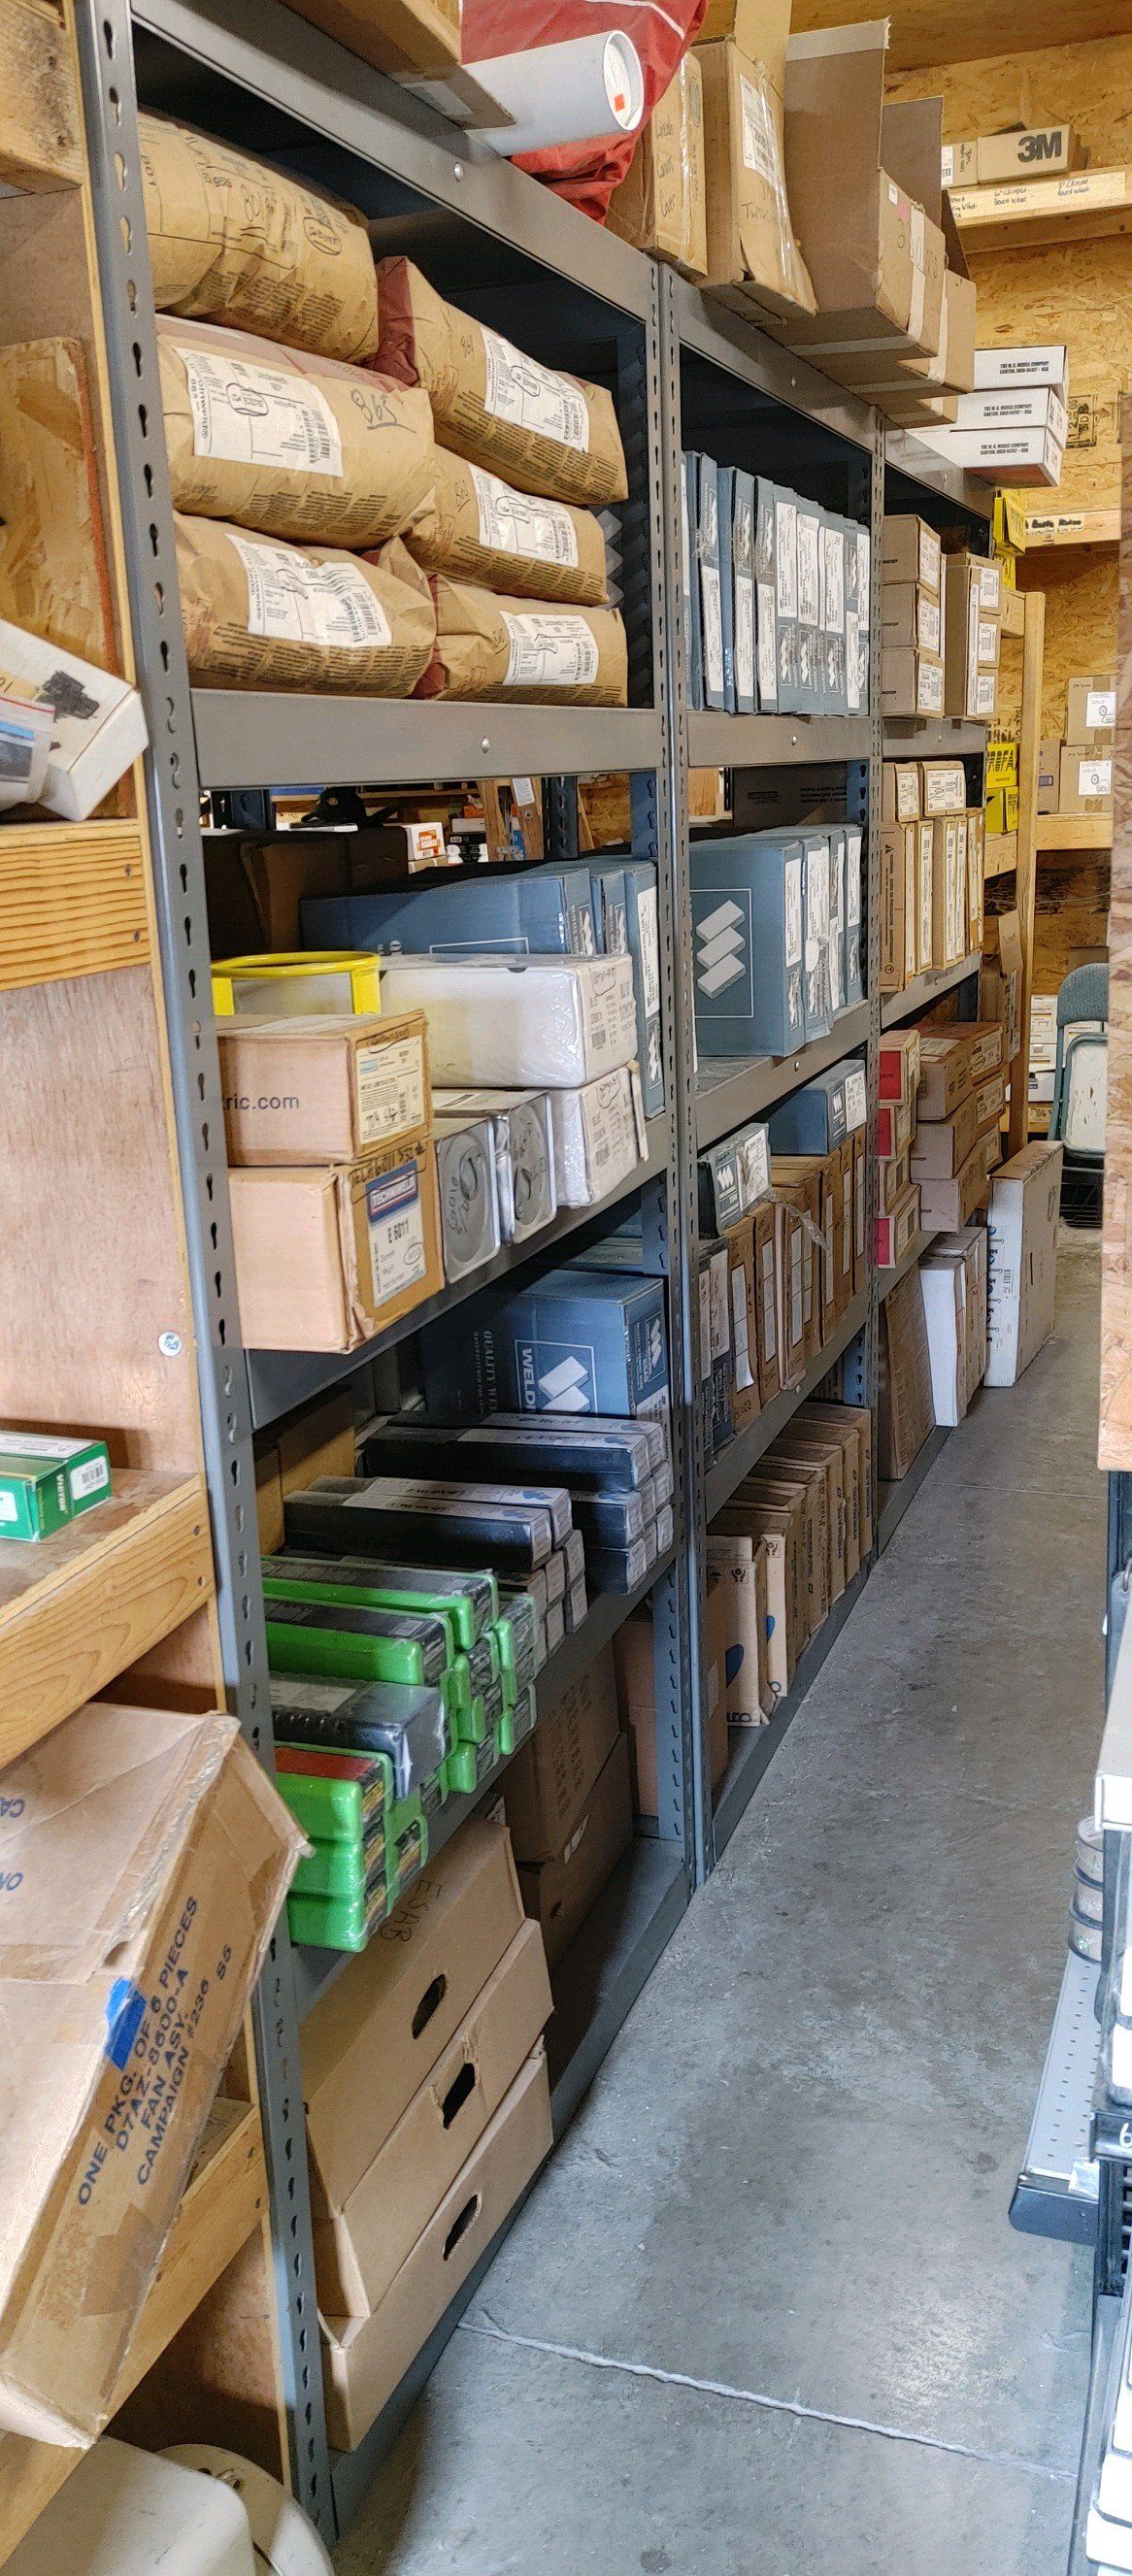 Welding Supplies in Boxes — New Philadelphia, OH — Gemstone Gas & Welding Supplies